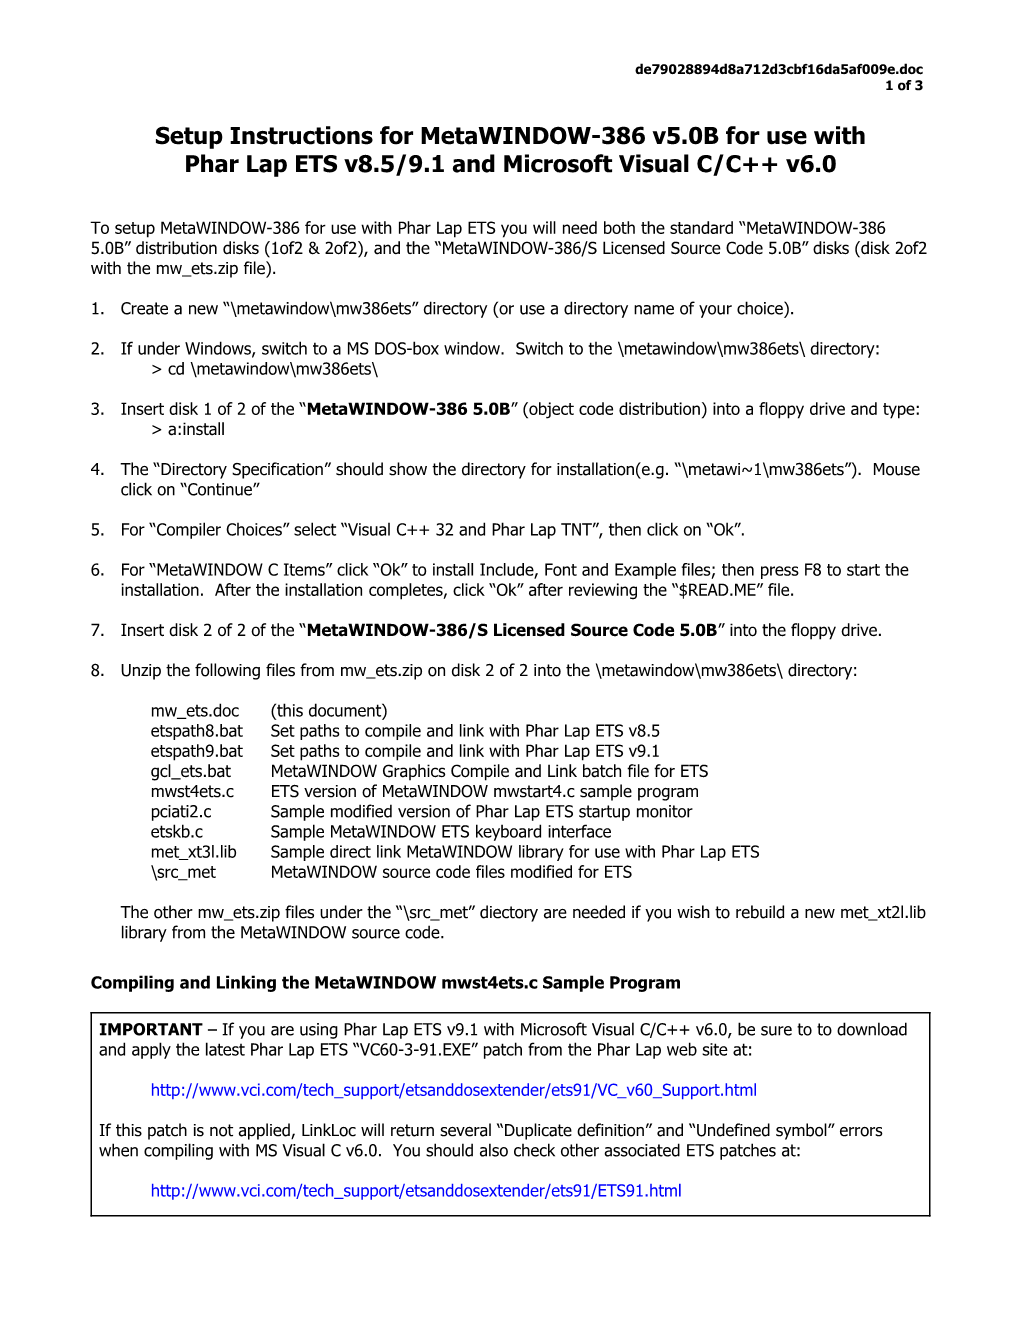 Metawindow-386 for Phar Lap ETS Setup Instructions